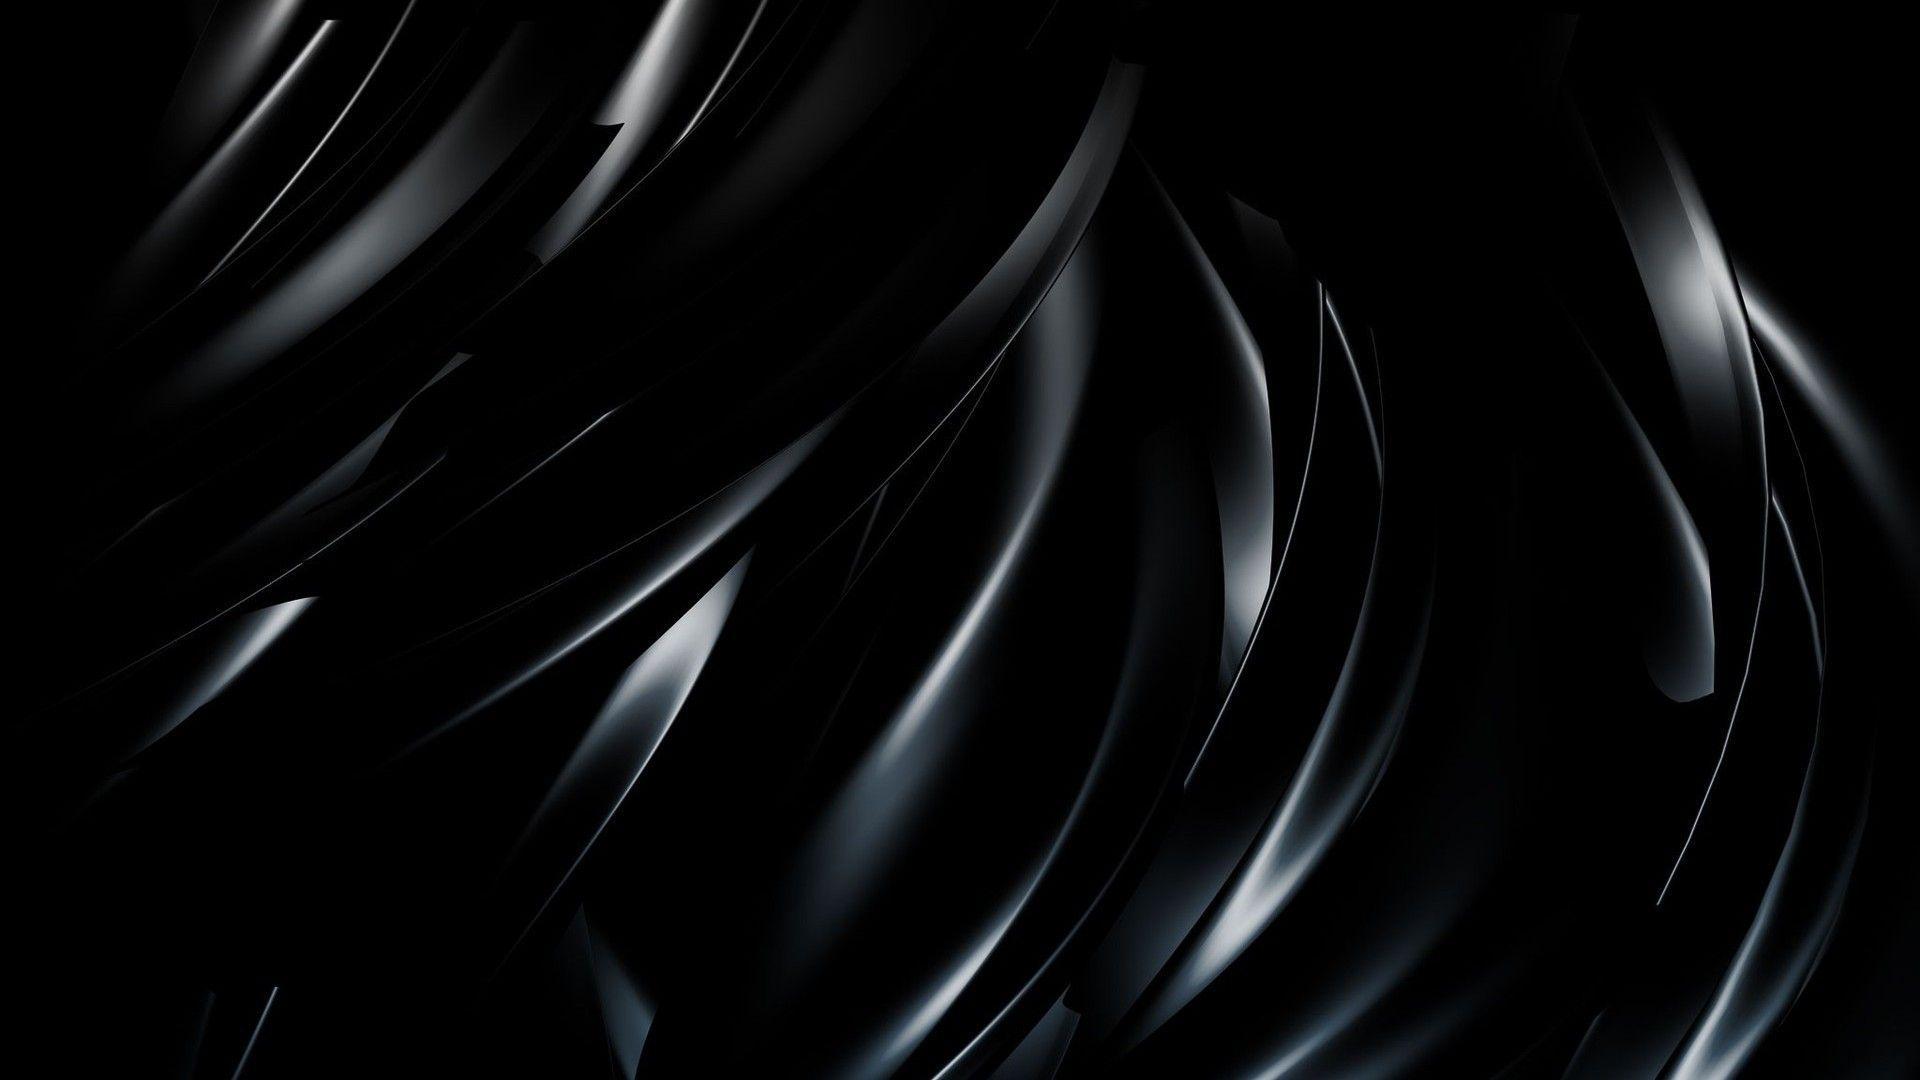 Dark Abstract Background HD Wallpaper 1920x1080PX Black HD